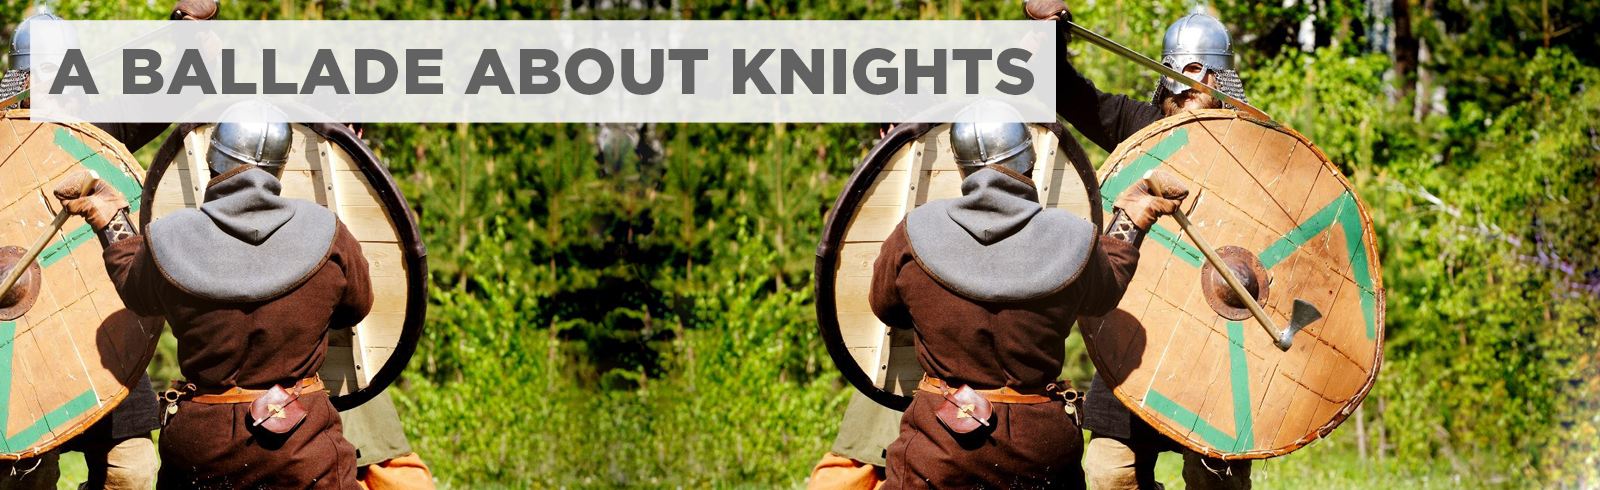 A Ballade about Knights